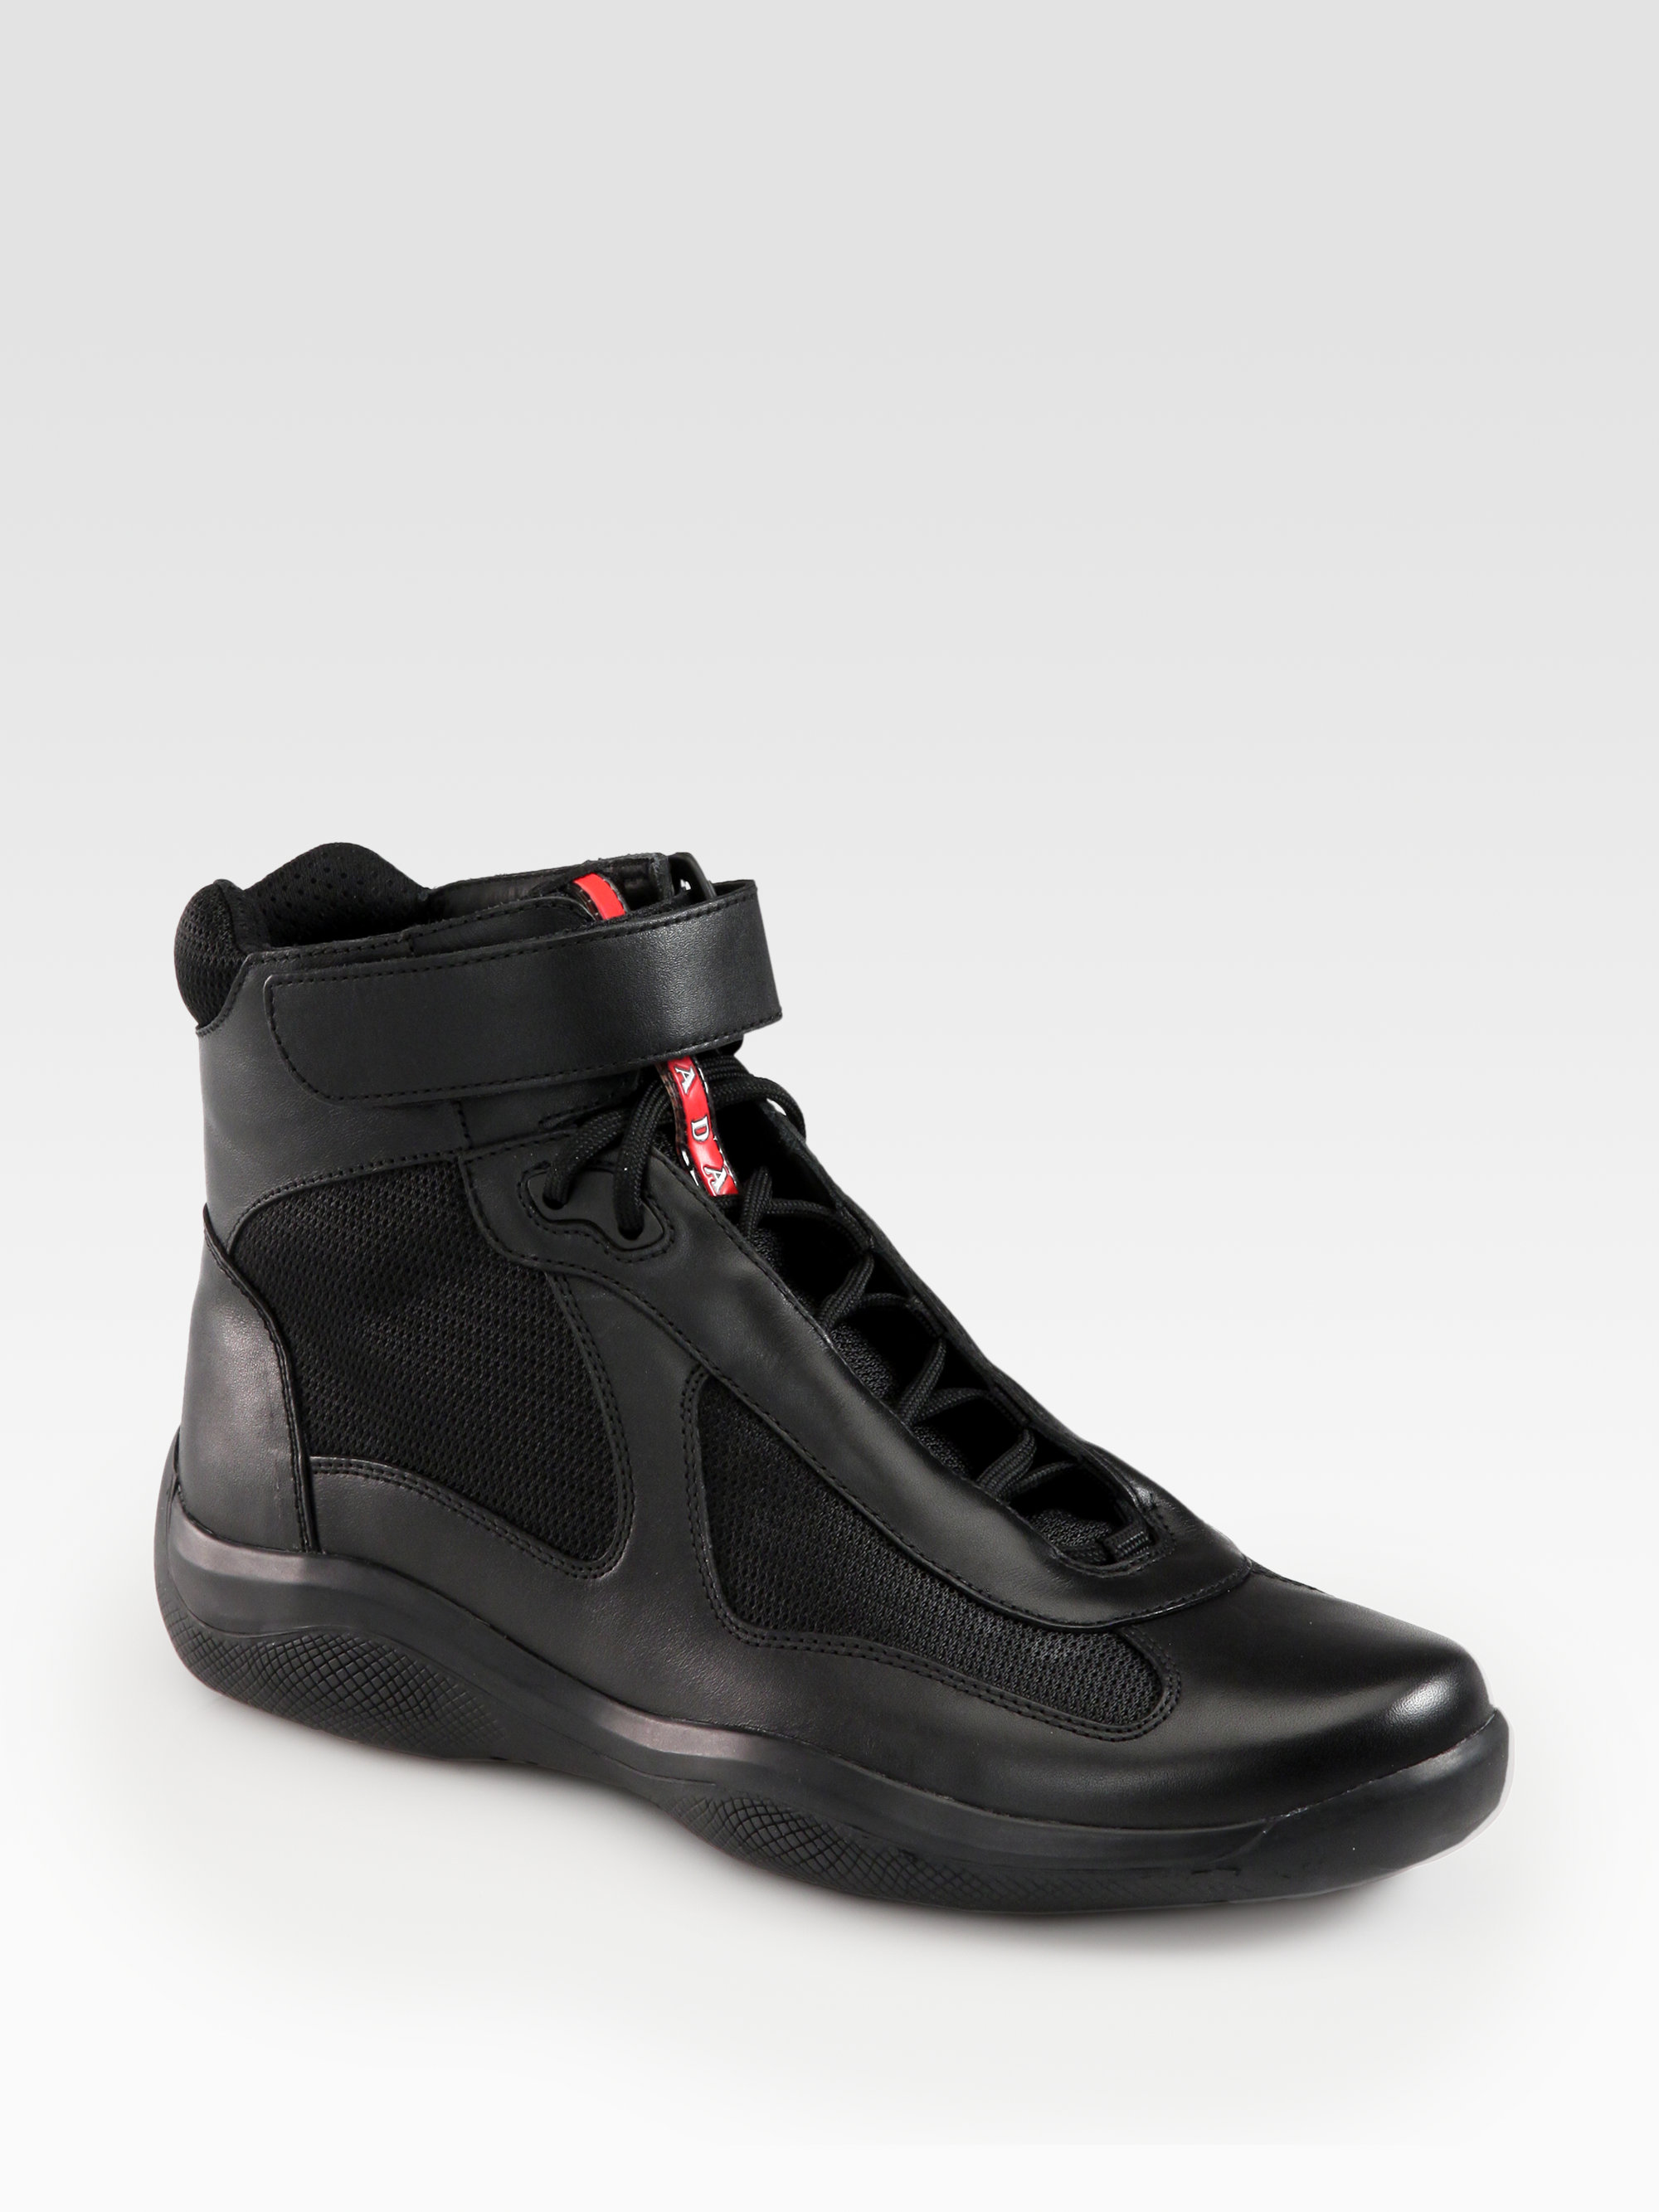 Prada High-top Leather Sneakers in Black for Men - Lyst